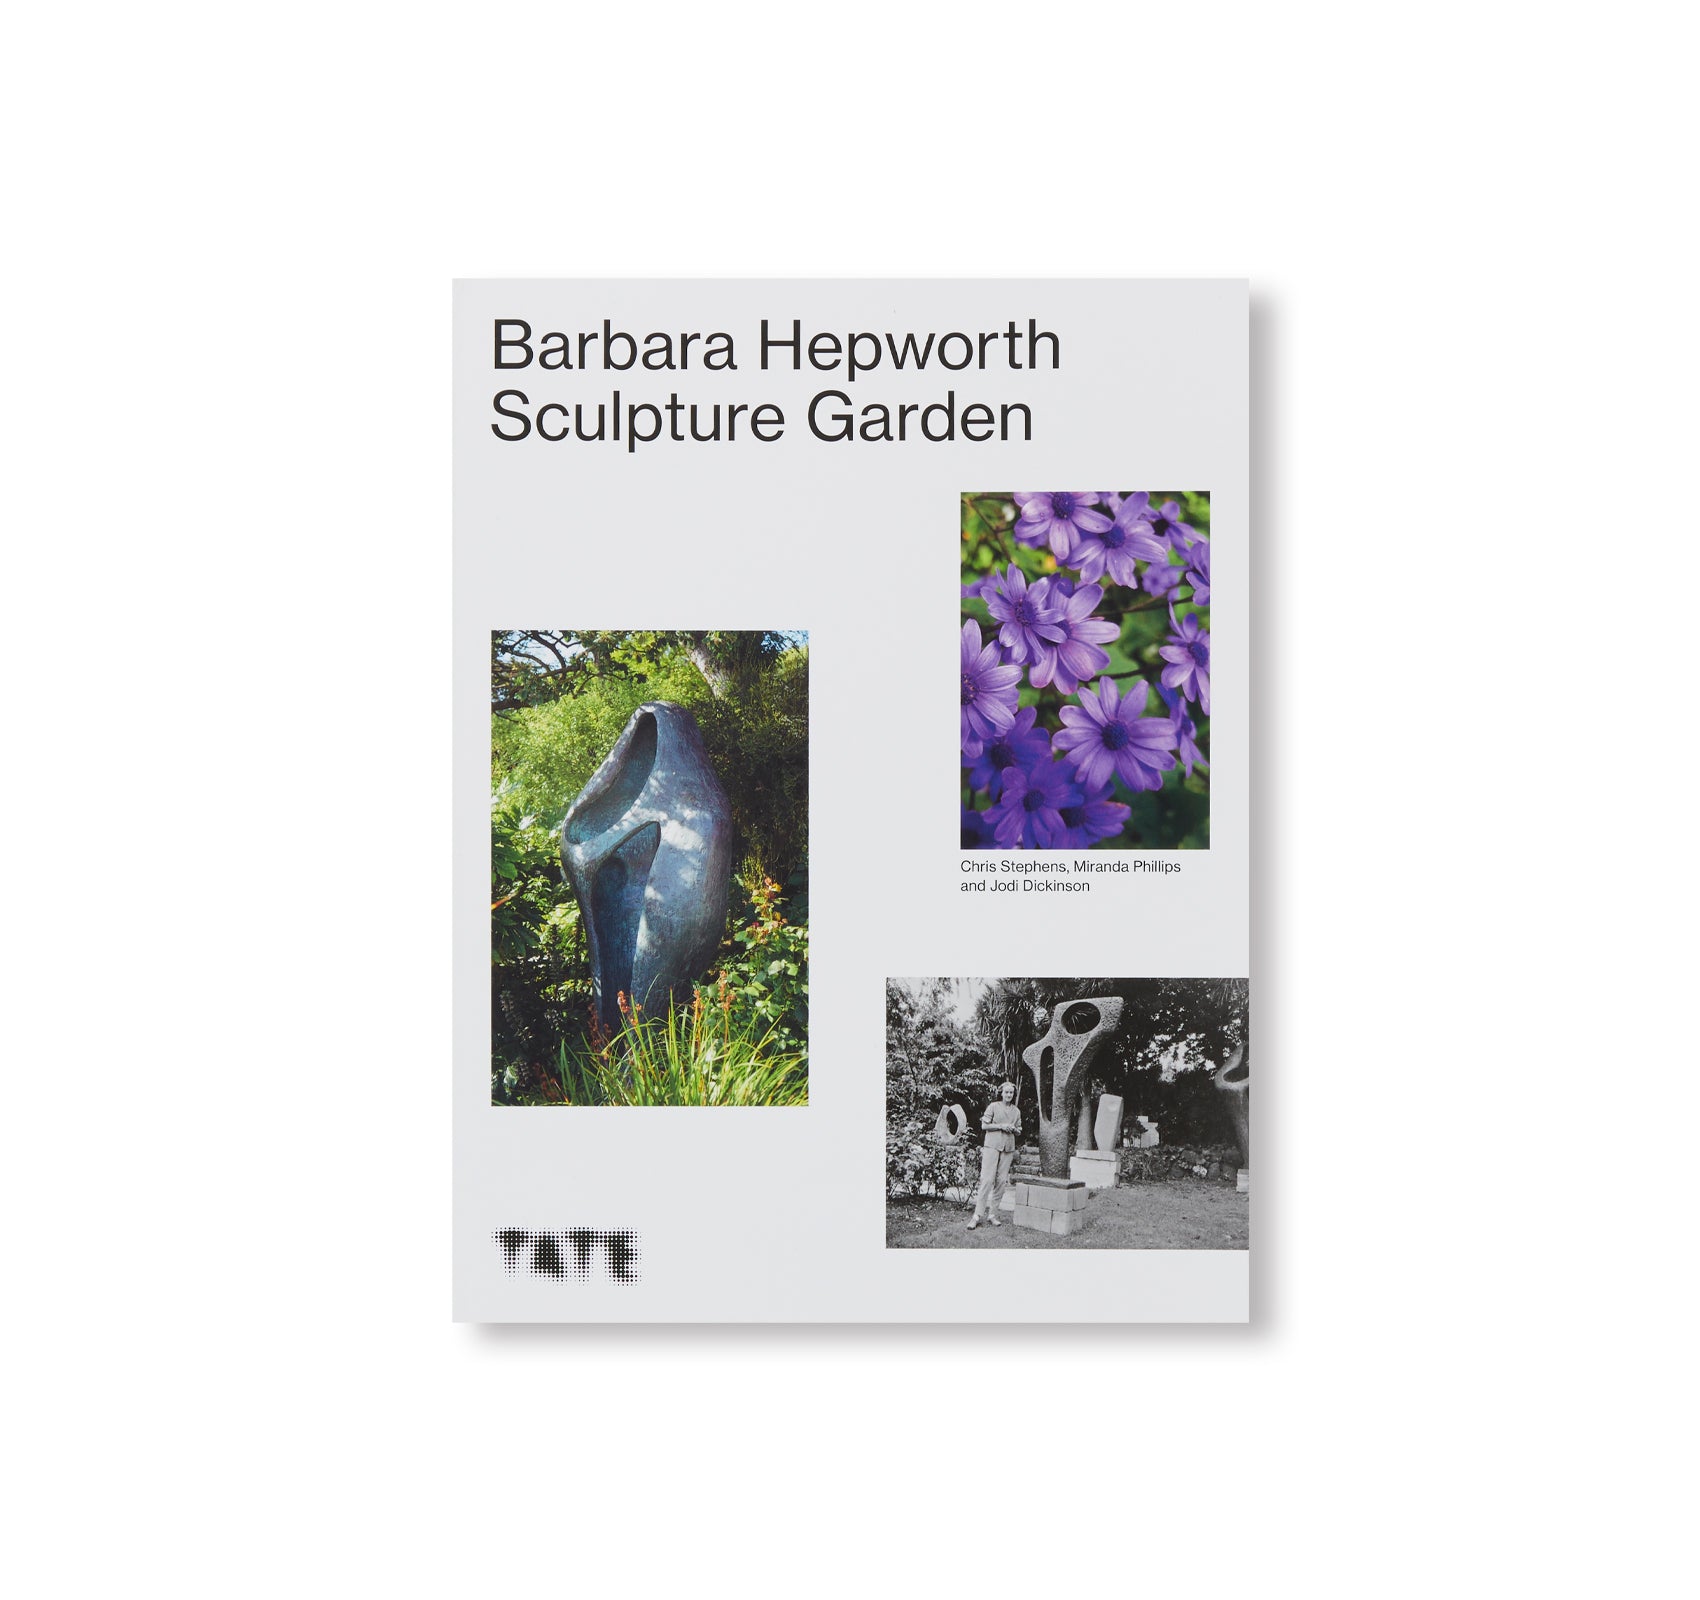 THE BARBARA HEPWORTH SCULPTURE GARDEN by Barbara Hepworth